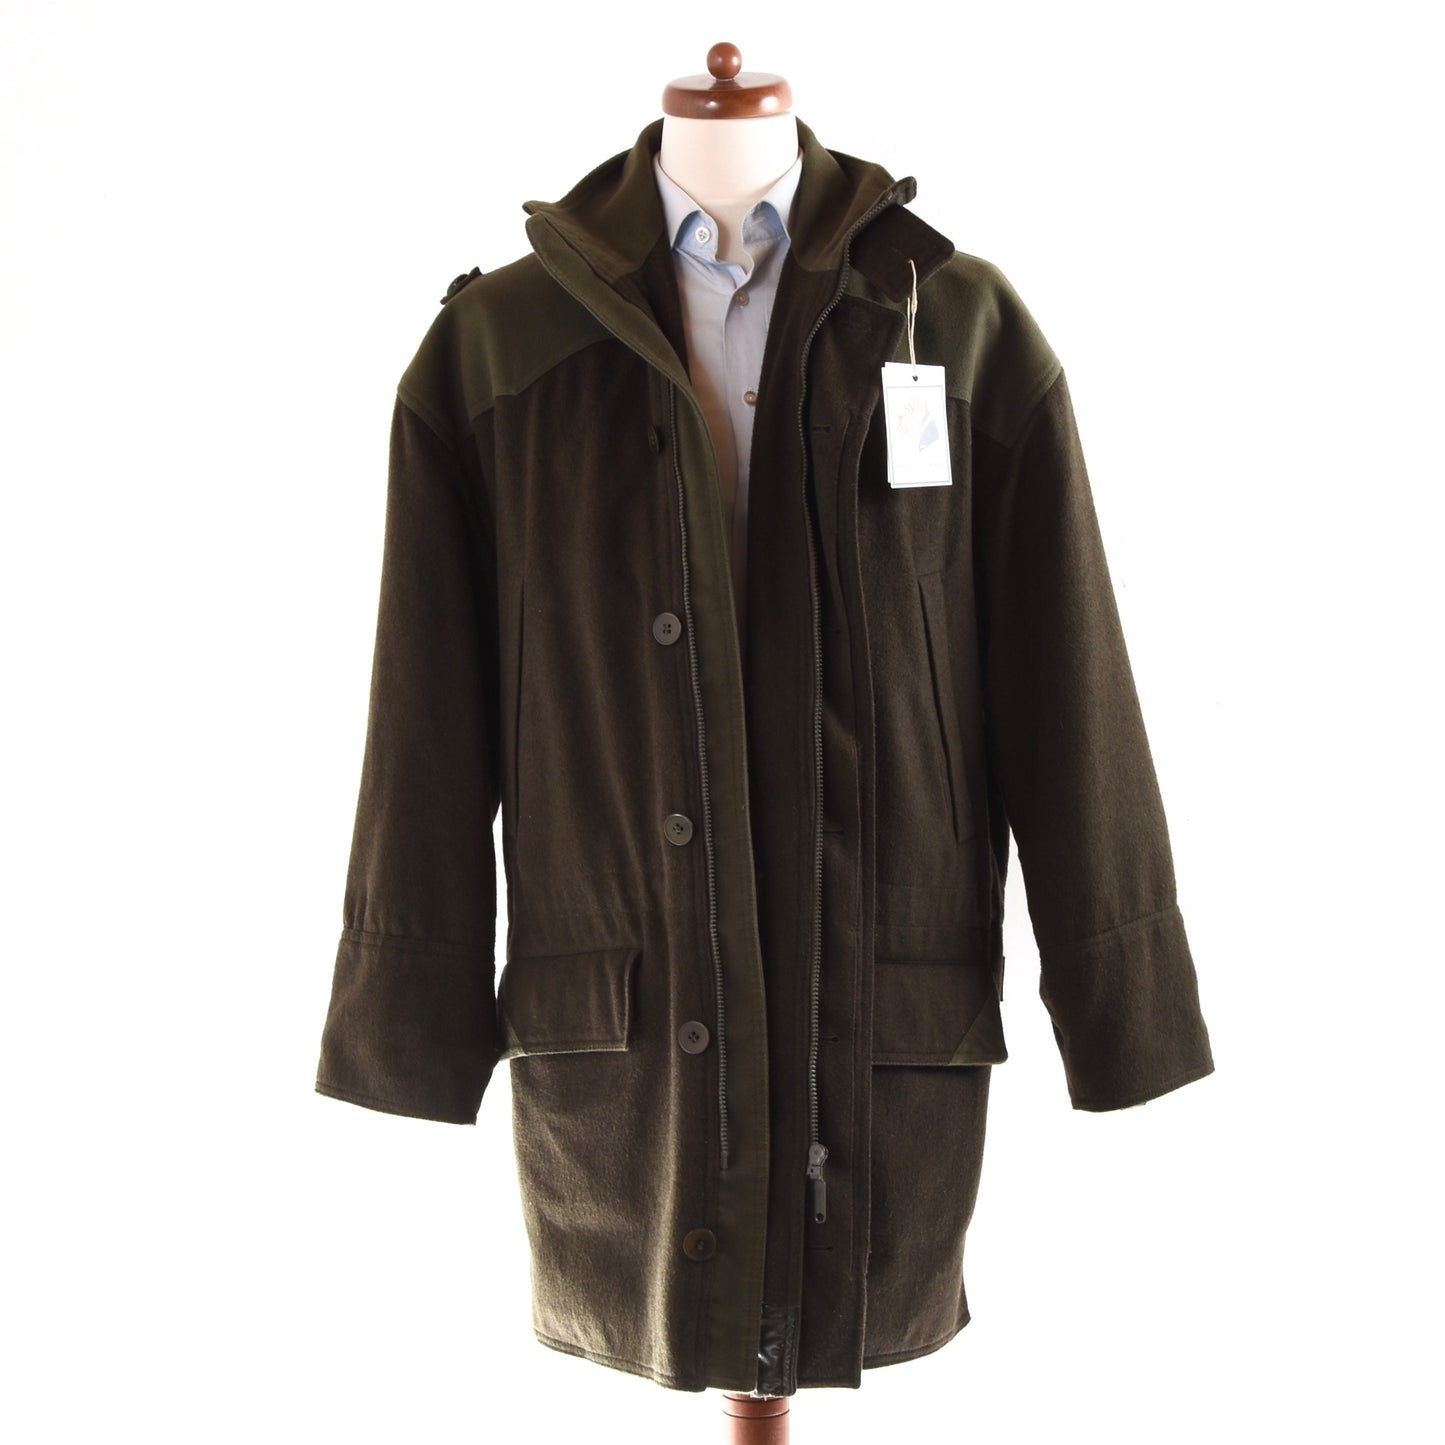 Alpjagd Hunting Coat Size 50 - Green